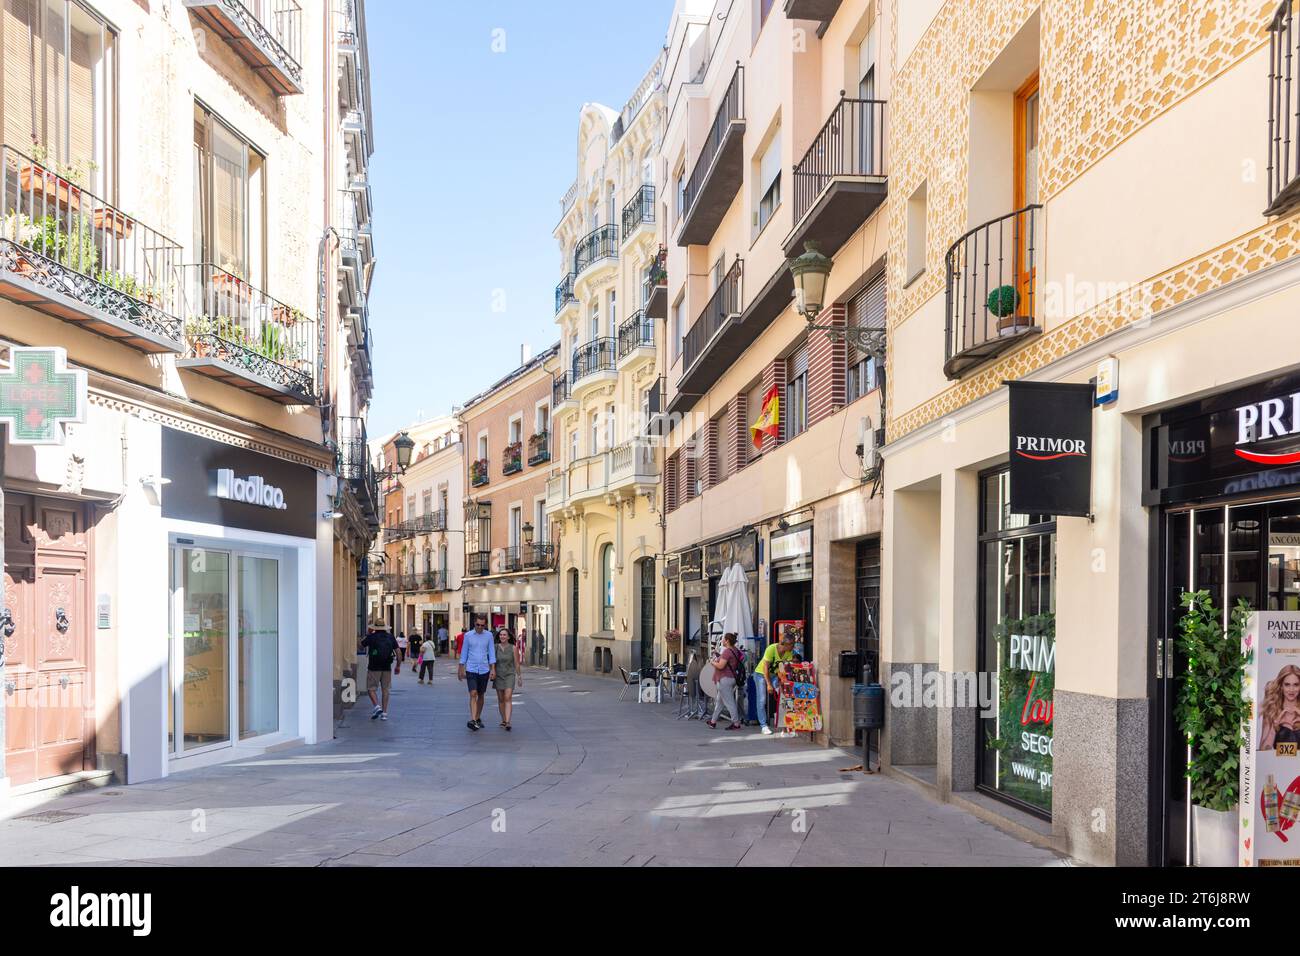 Shopping street, Plaza del Corpus, Calle Juan Bravo, Jewish Quarter, Segovia, Castile and León, Kingdom of Spain Stock Photo